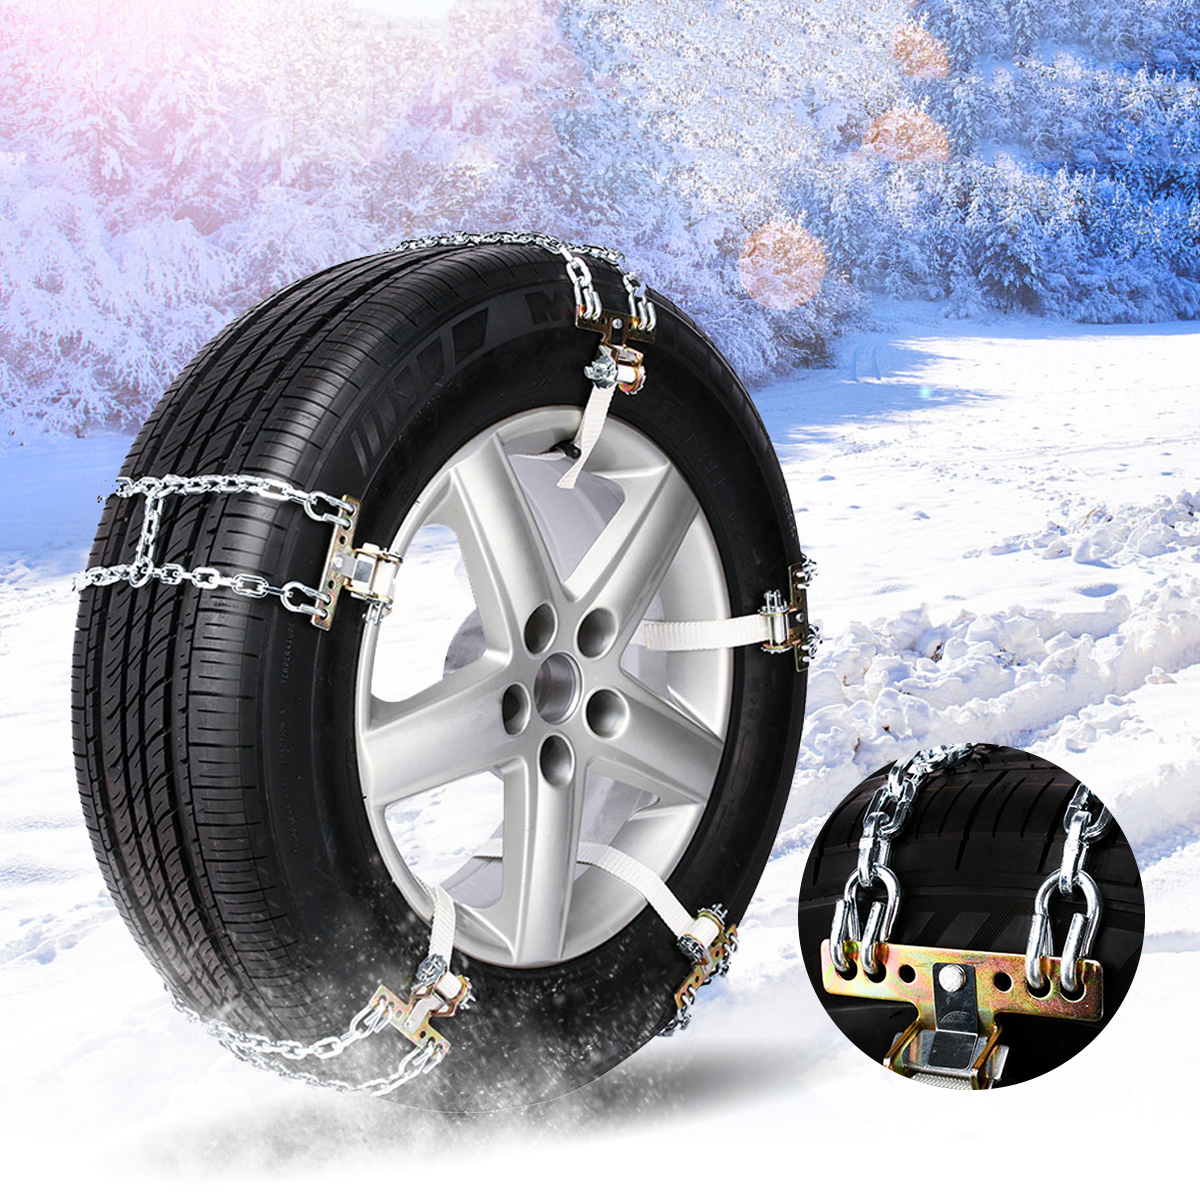 

Universal Snow Chain Anti-skid Chains for Car Tire SUV MPV